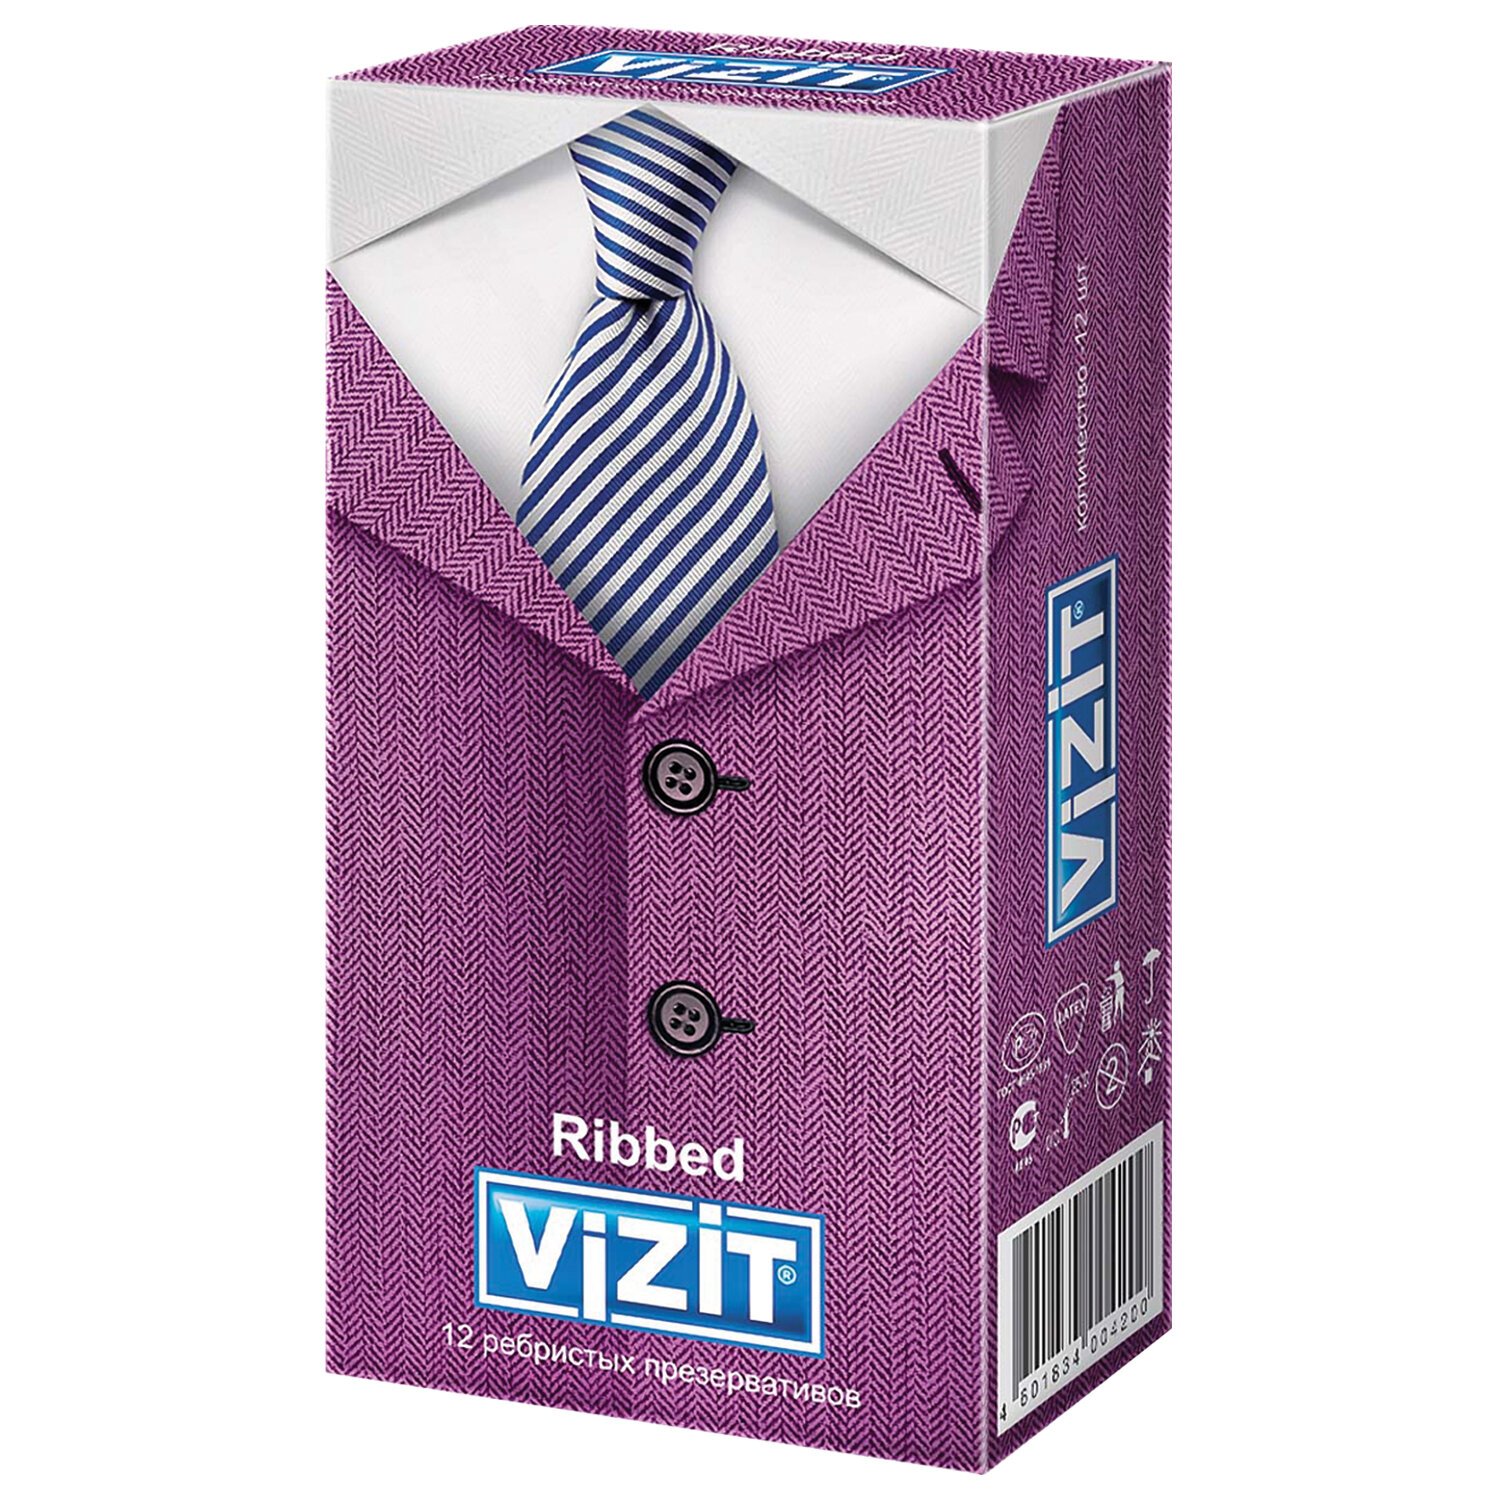 Презервативы VIZIT 101010321, комплект 3 упаковки по 12 шт.